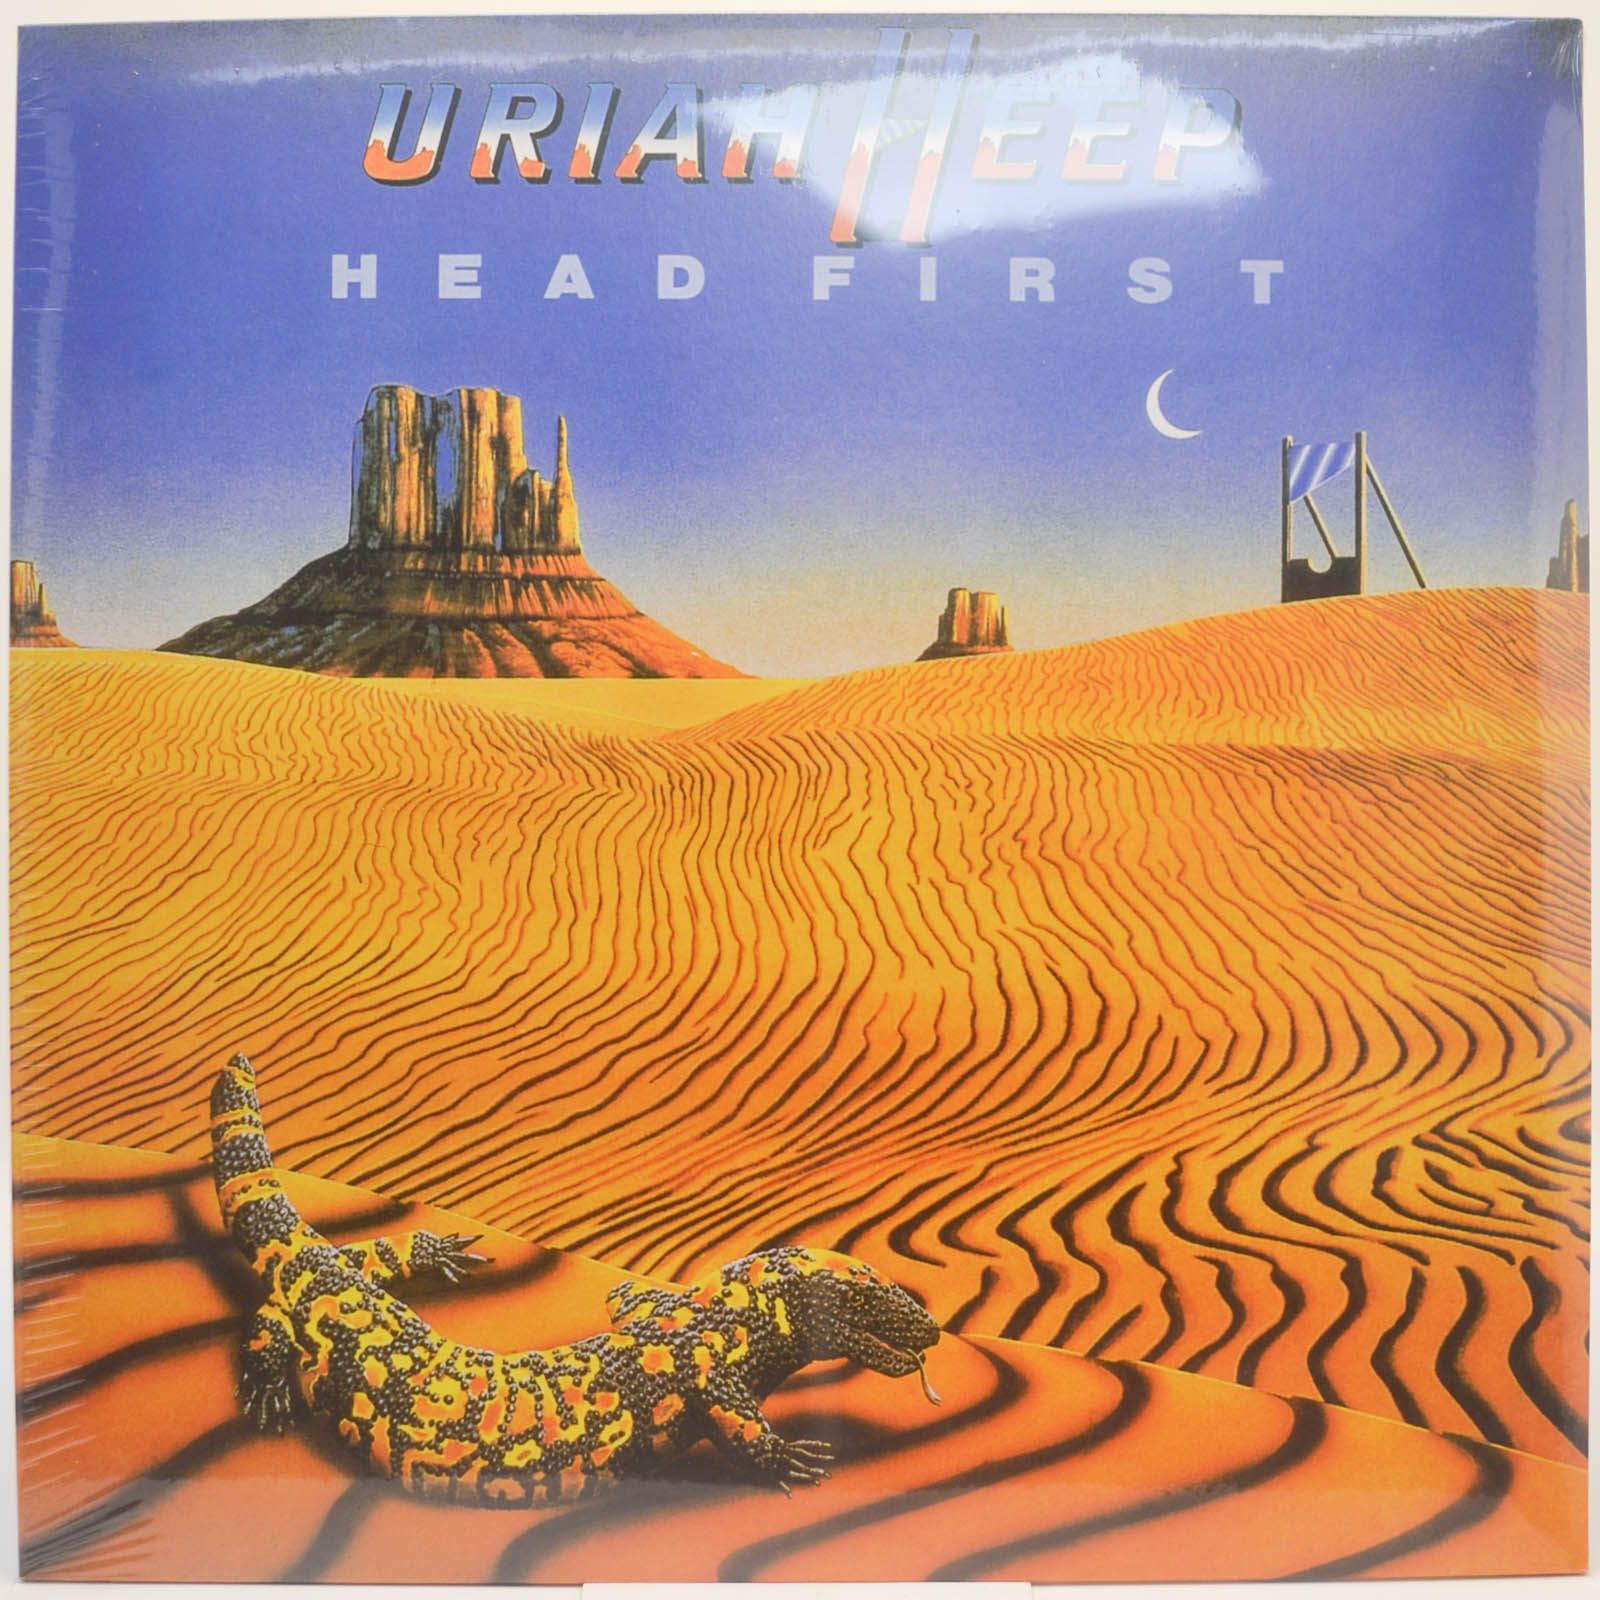 Uriah Heep — Head First (UK), 1983